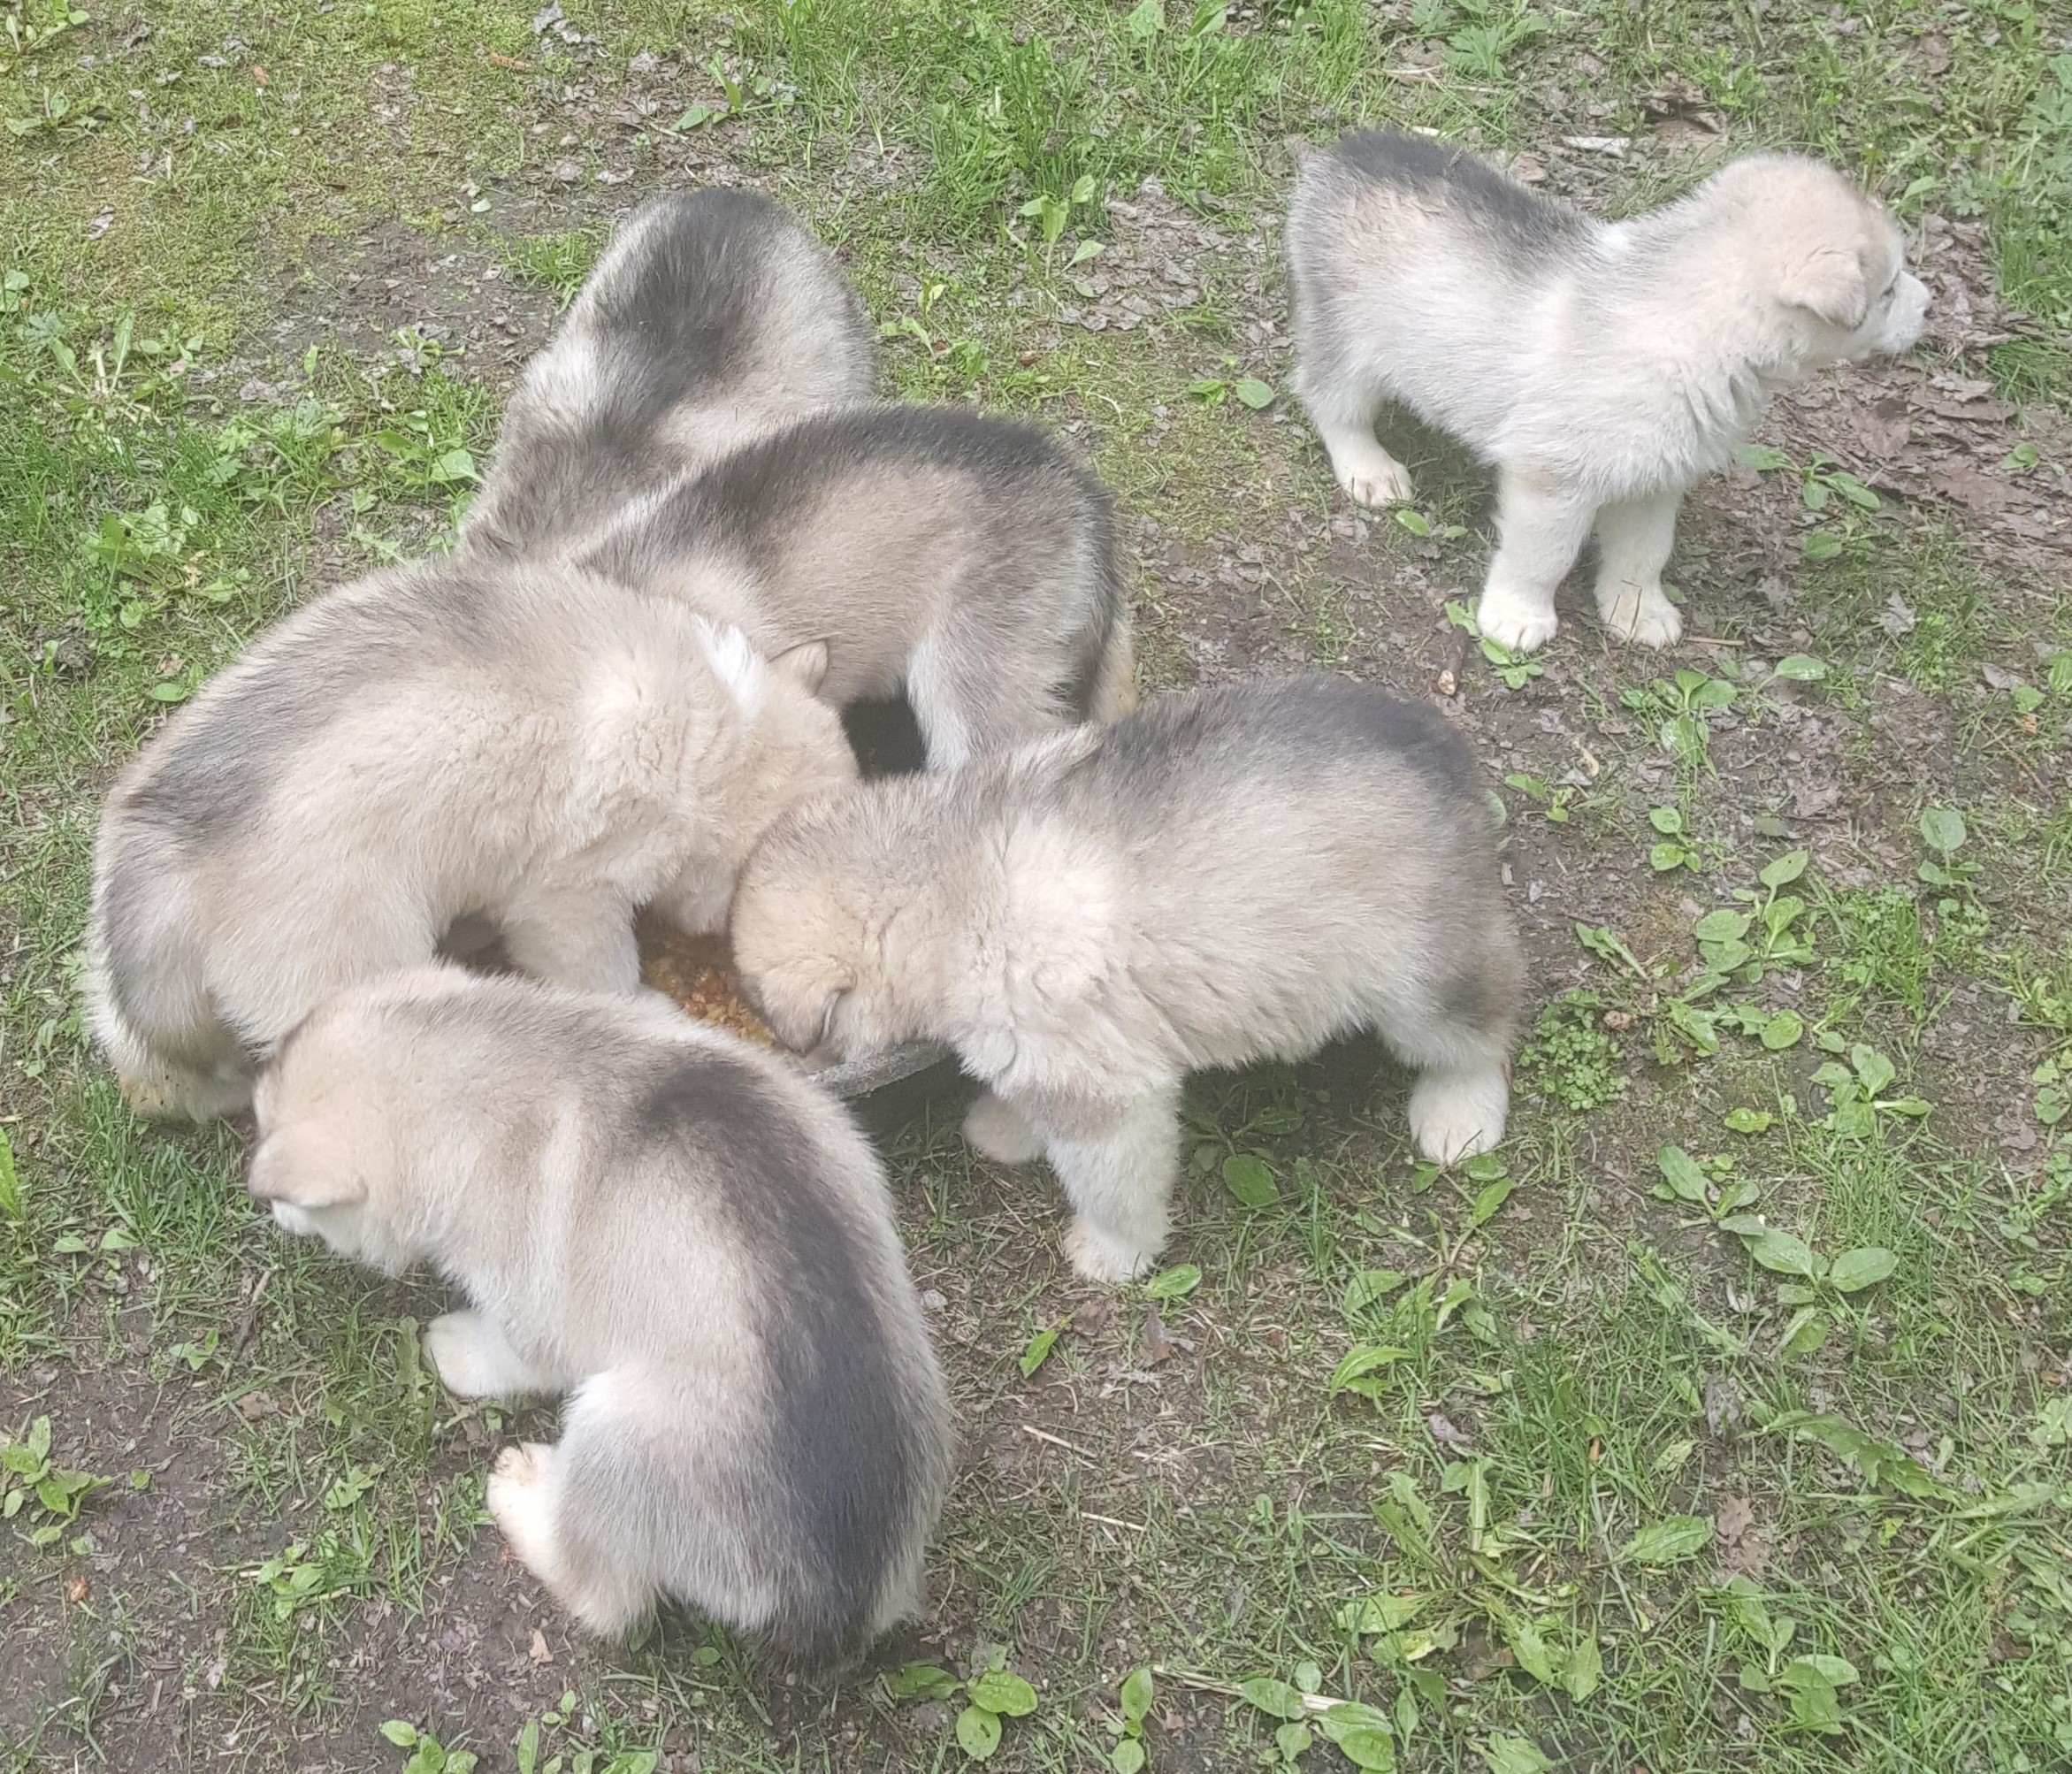 Malamute Puppies eating